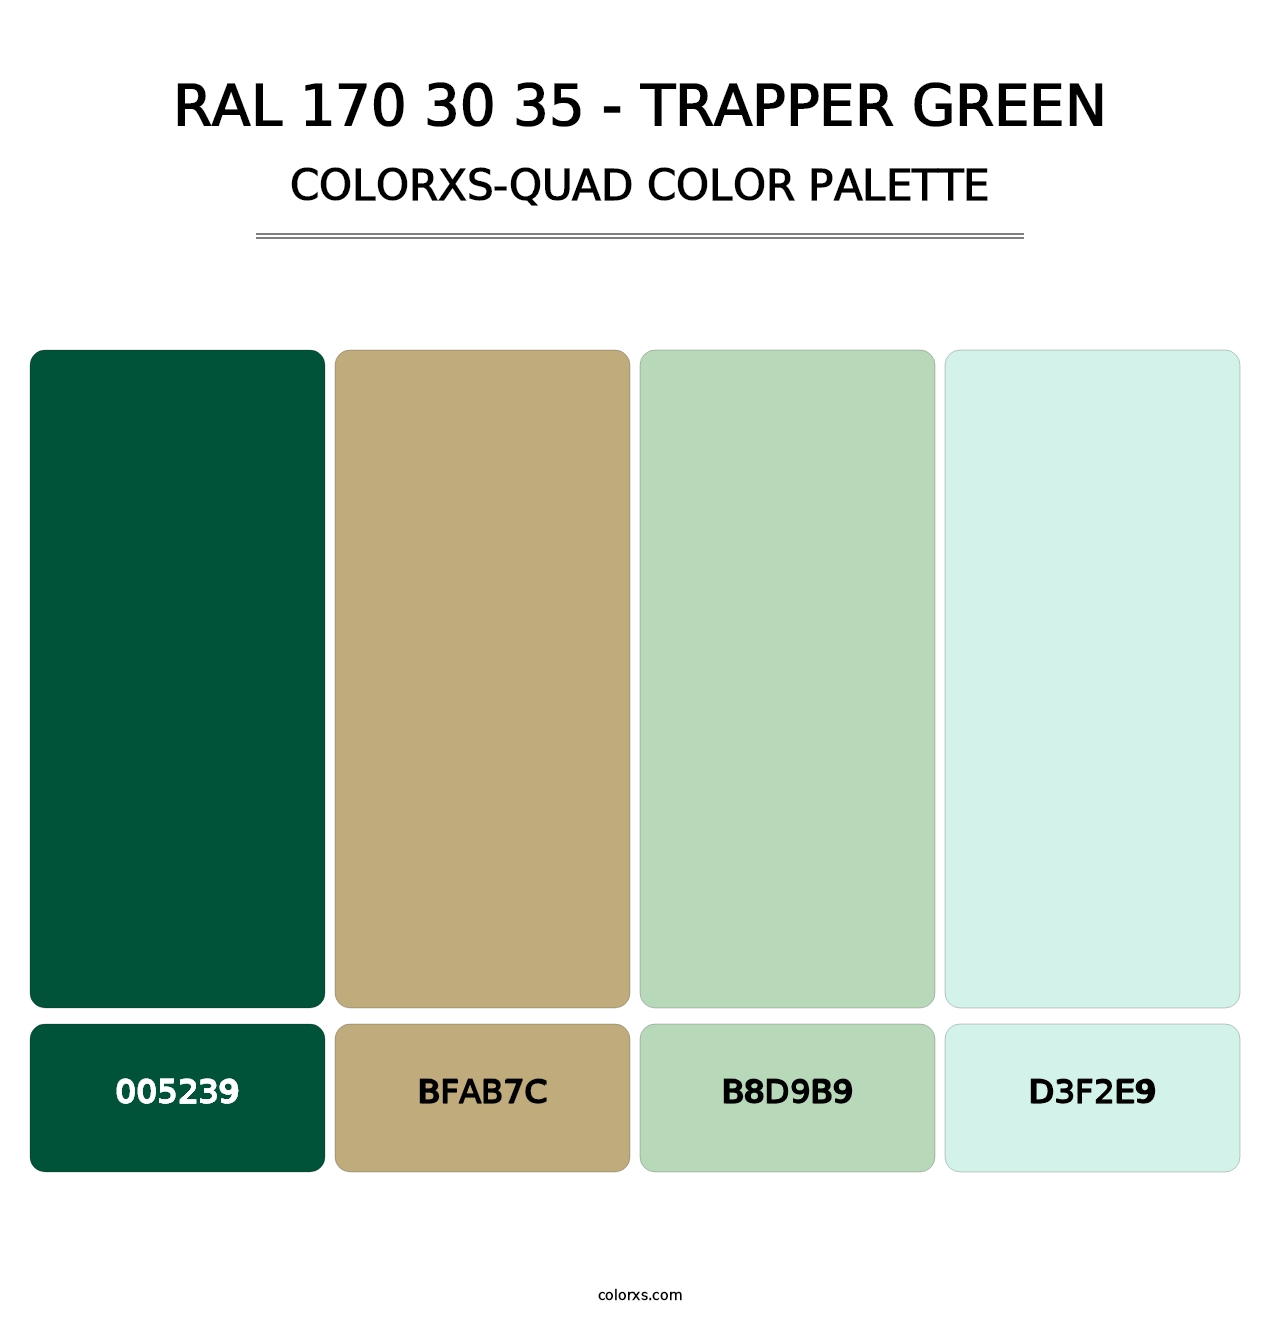 RAL 170 30 35 - Trapper Green - Colorxs Quad Palette